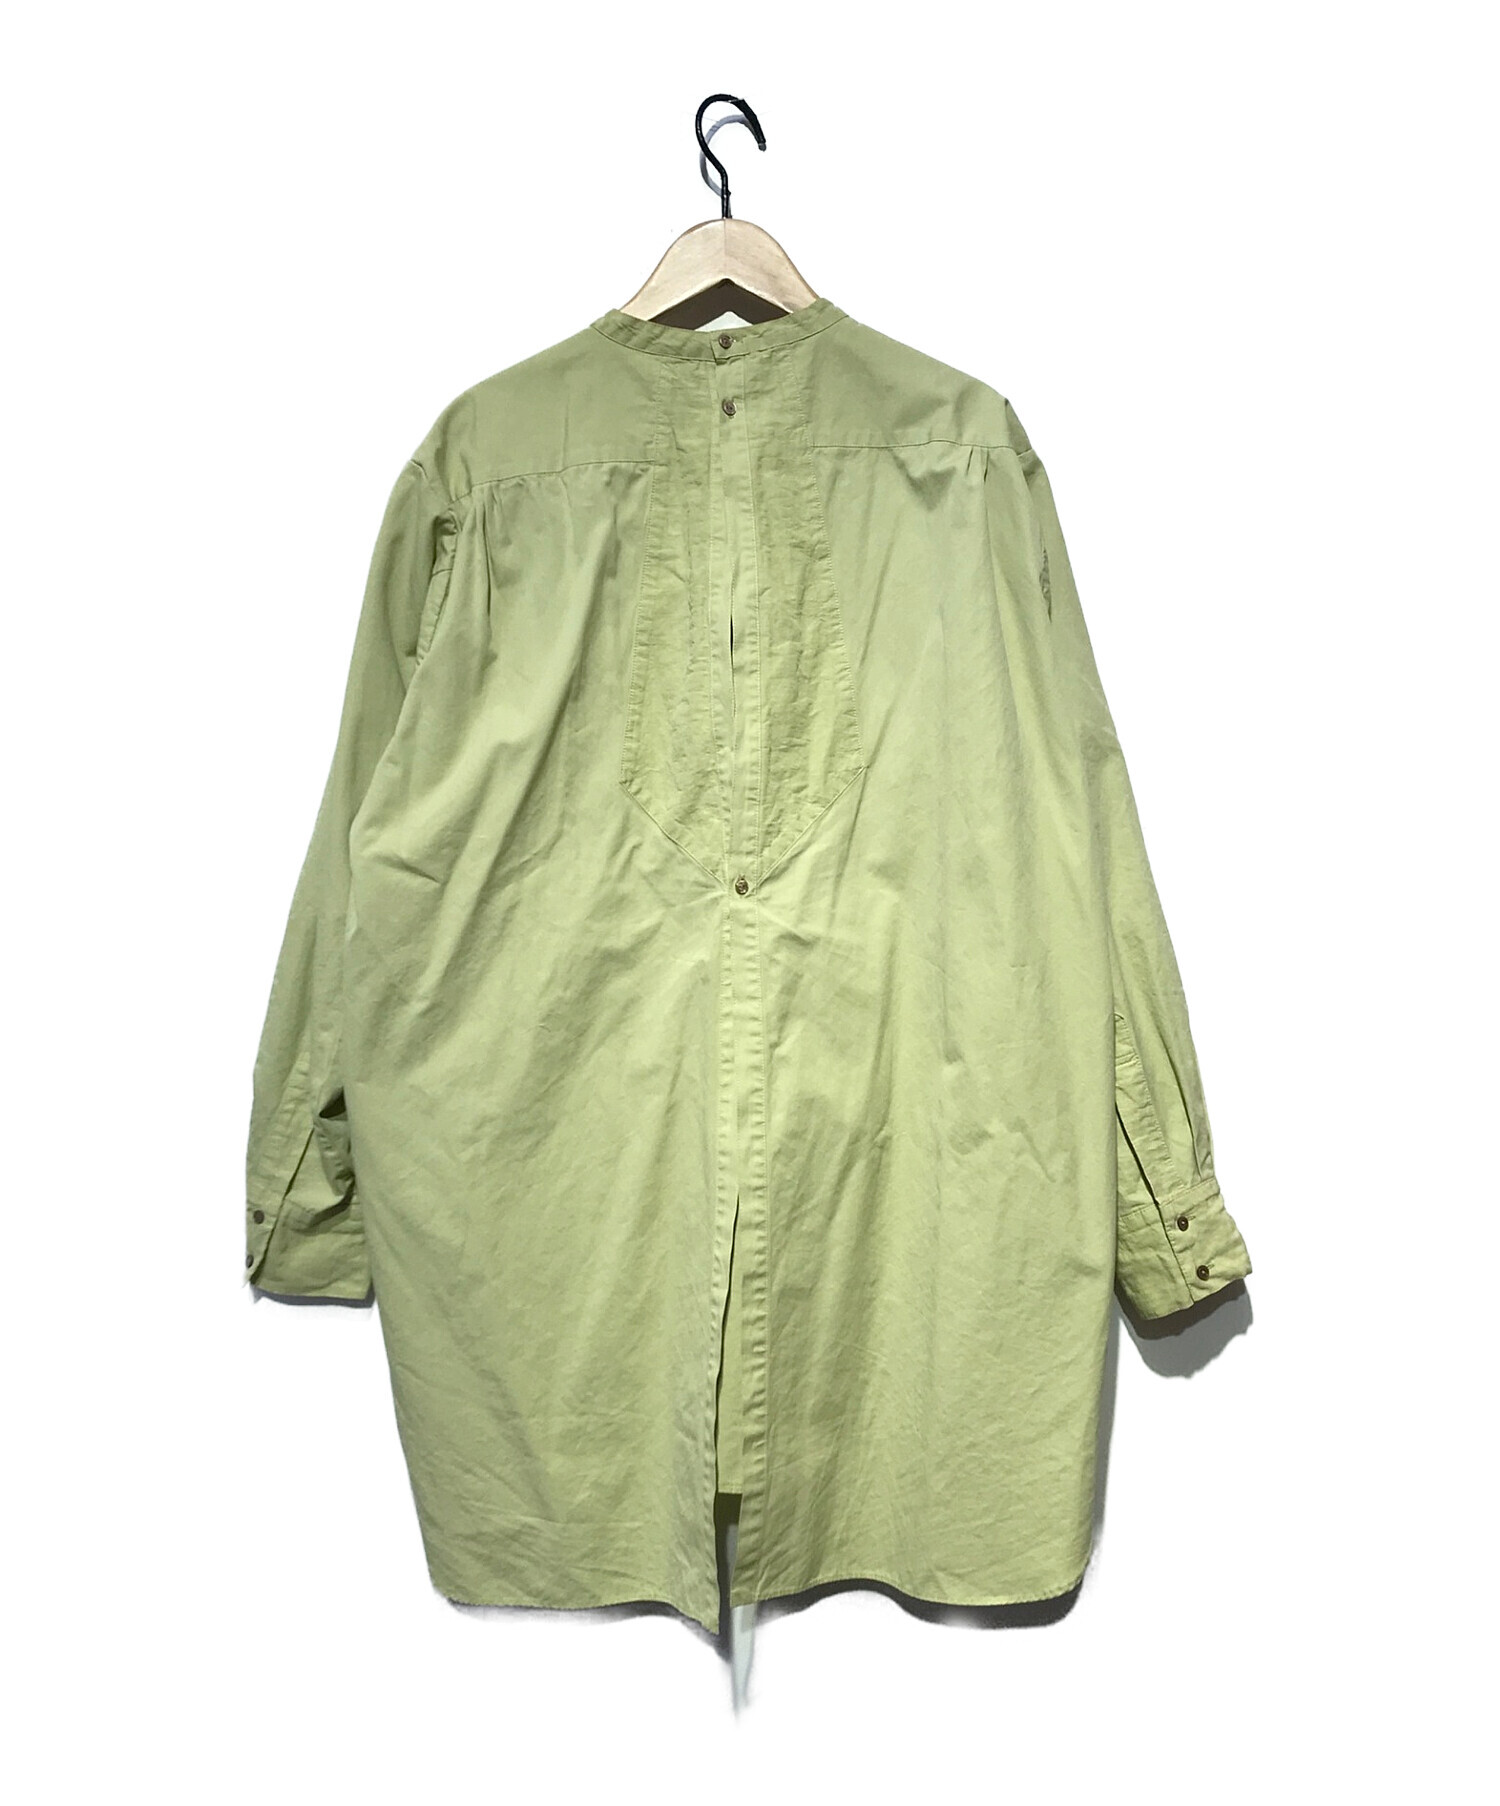 6(ROKU) BEAUTY&YOUTH (ロク ビューティーアンドユース) ピンタックシャツ / PIN TUCK SHIRT ライトグリーン  サイズ:38